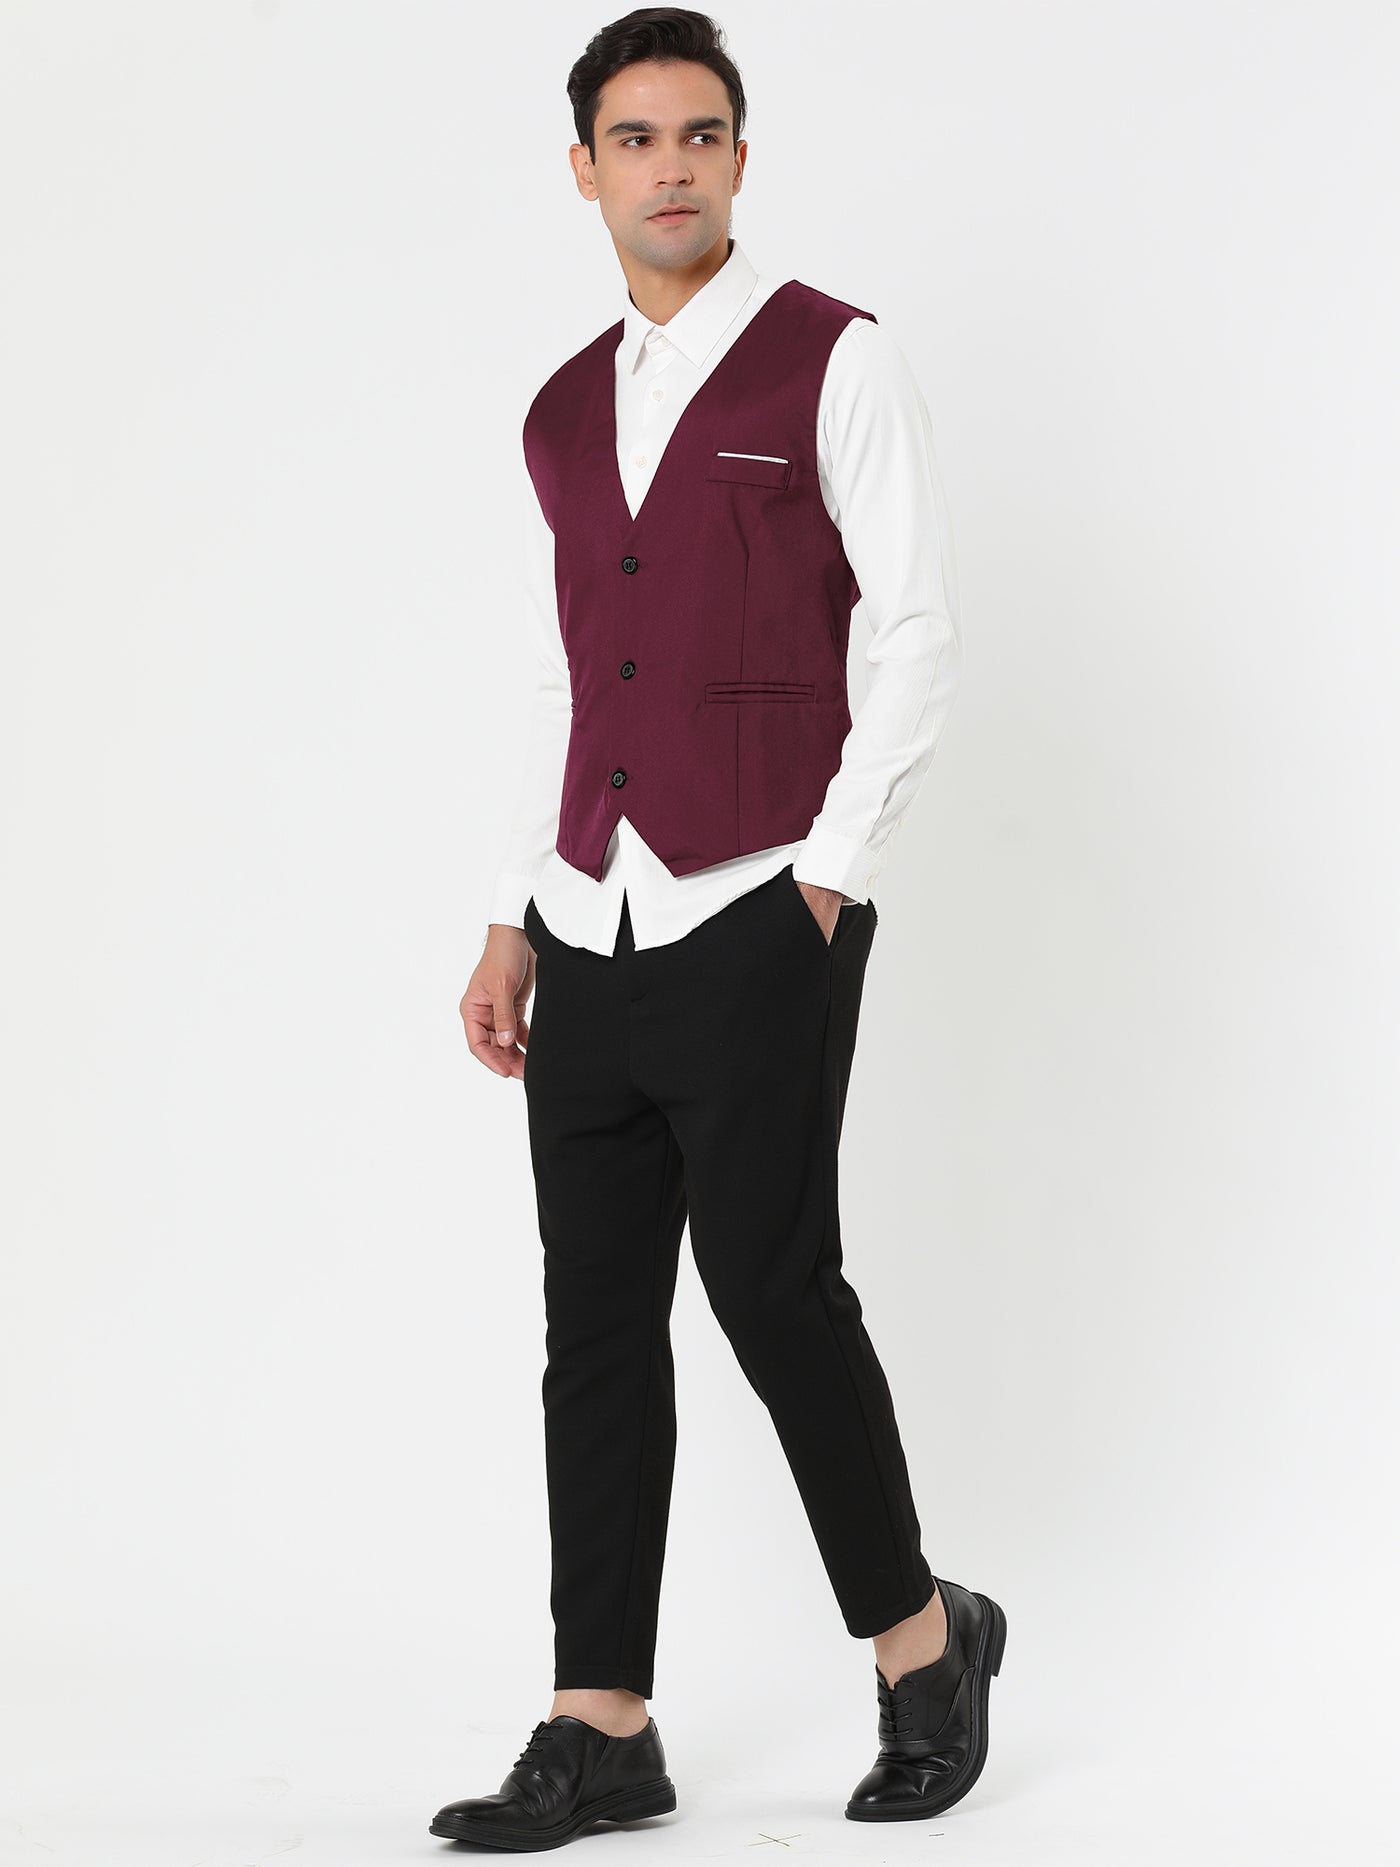 Bublédon Solid V Neck Waistcoat Formal Business Suit Vest